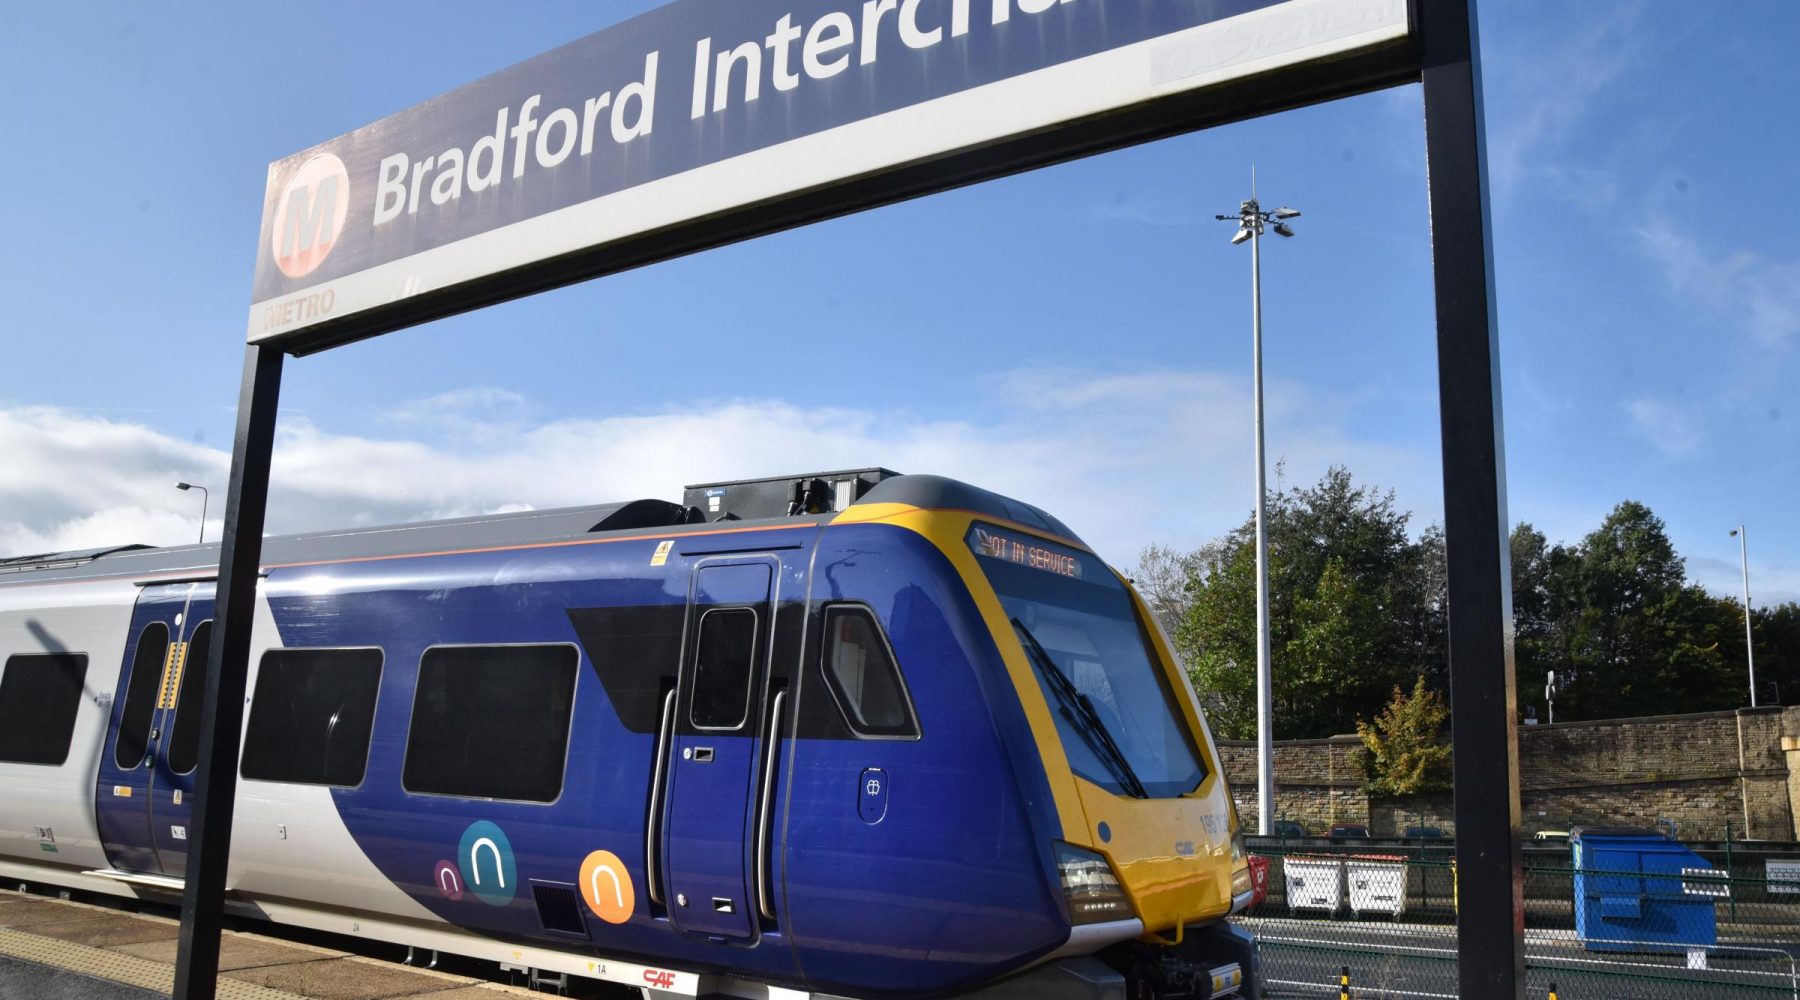 Northern Rail's new 'state-of-the-art' train rolls into Bradford…